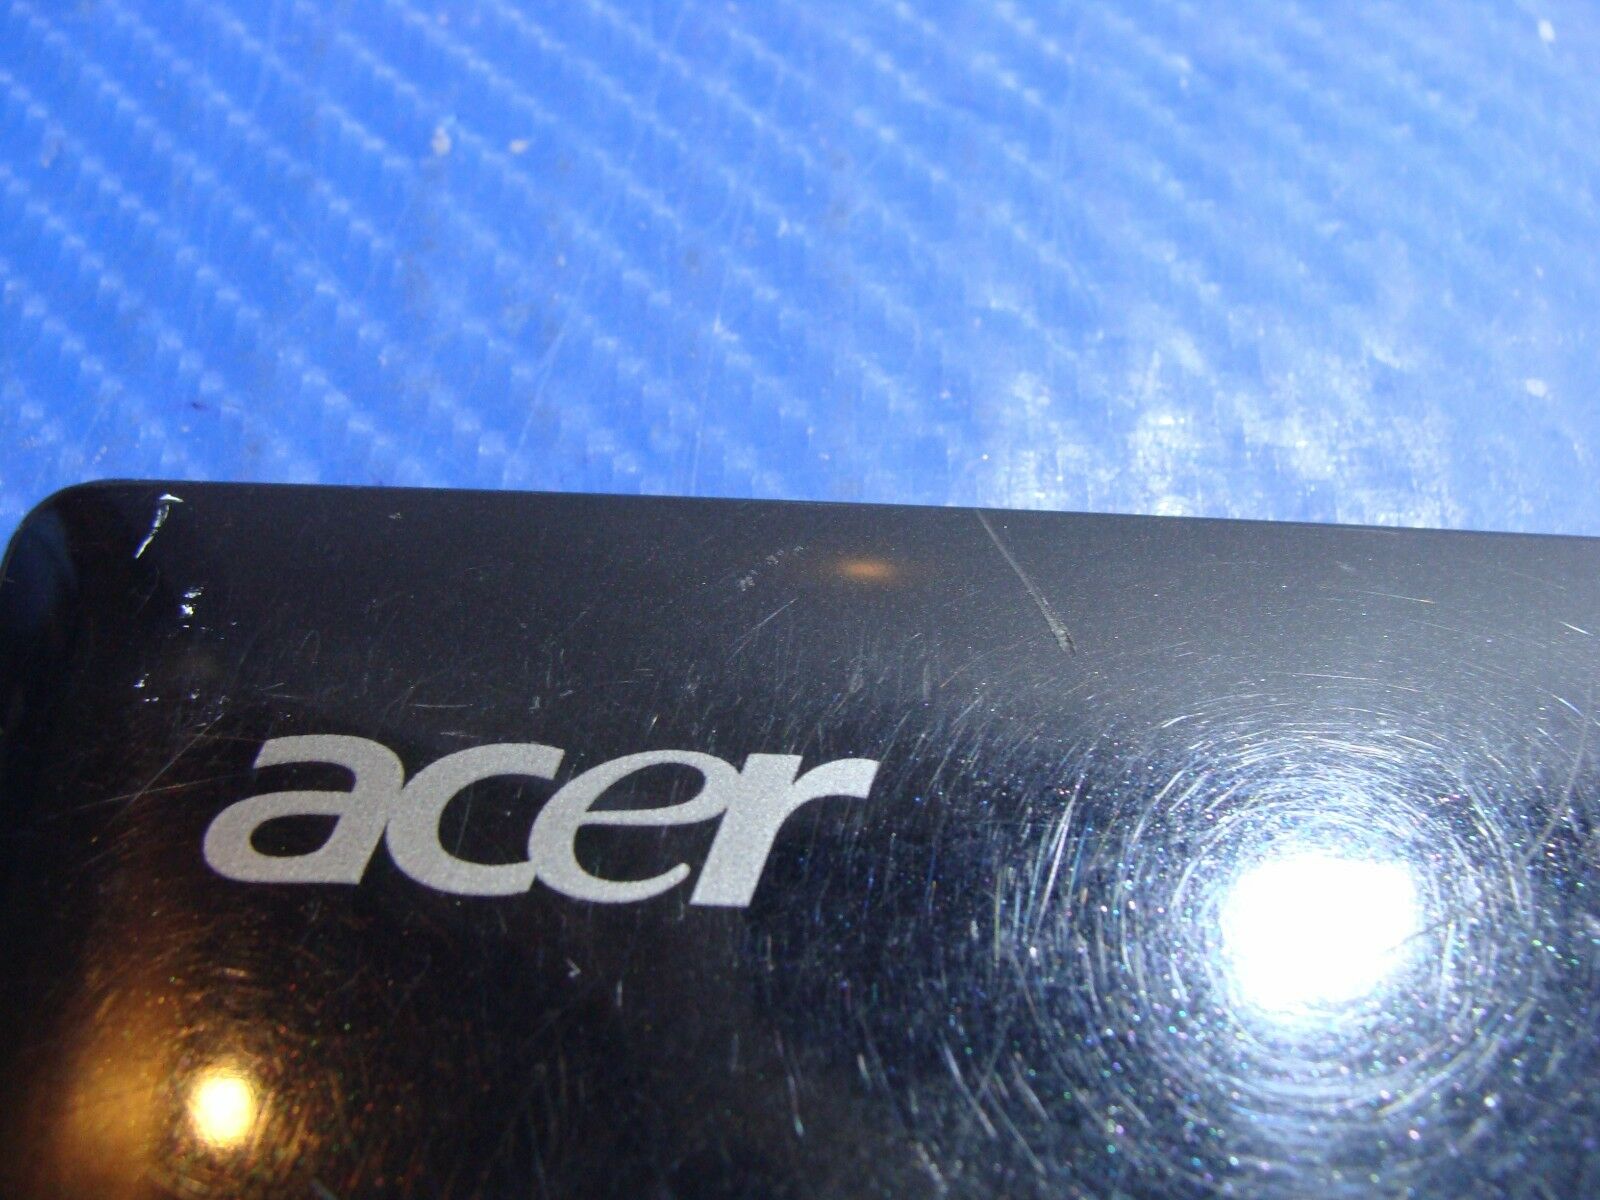 Acer Aspire 10.1